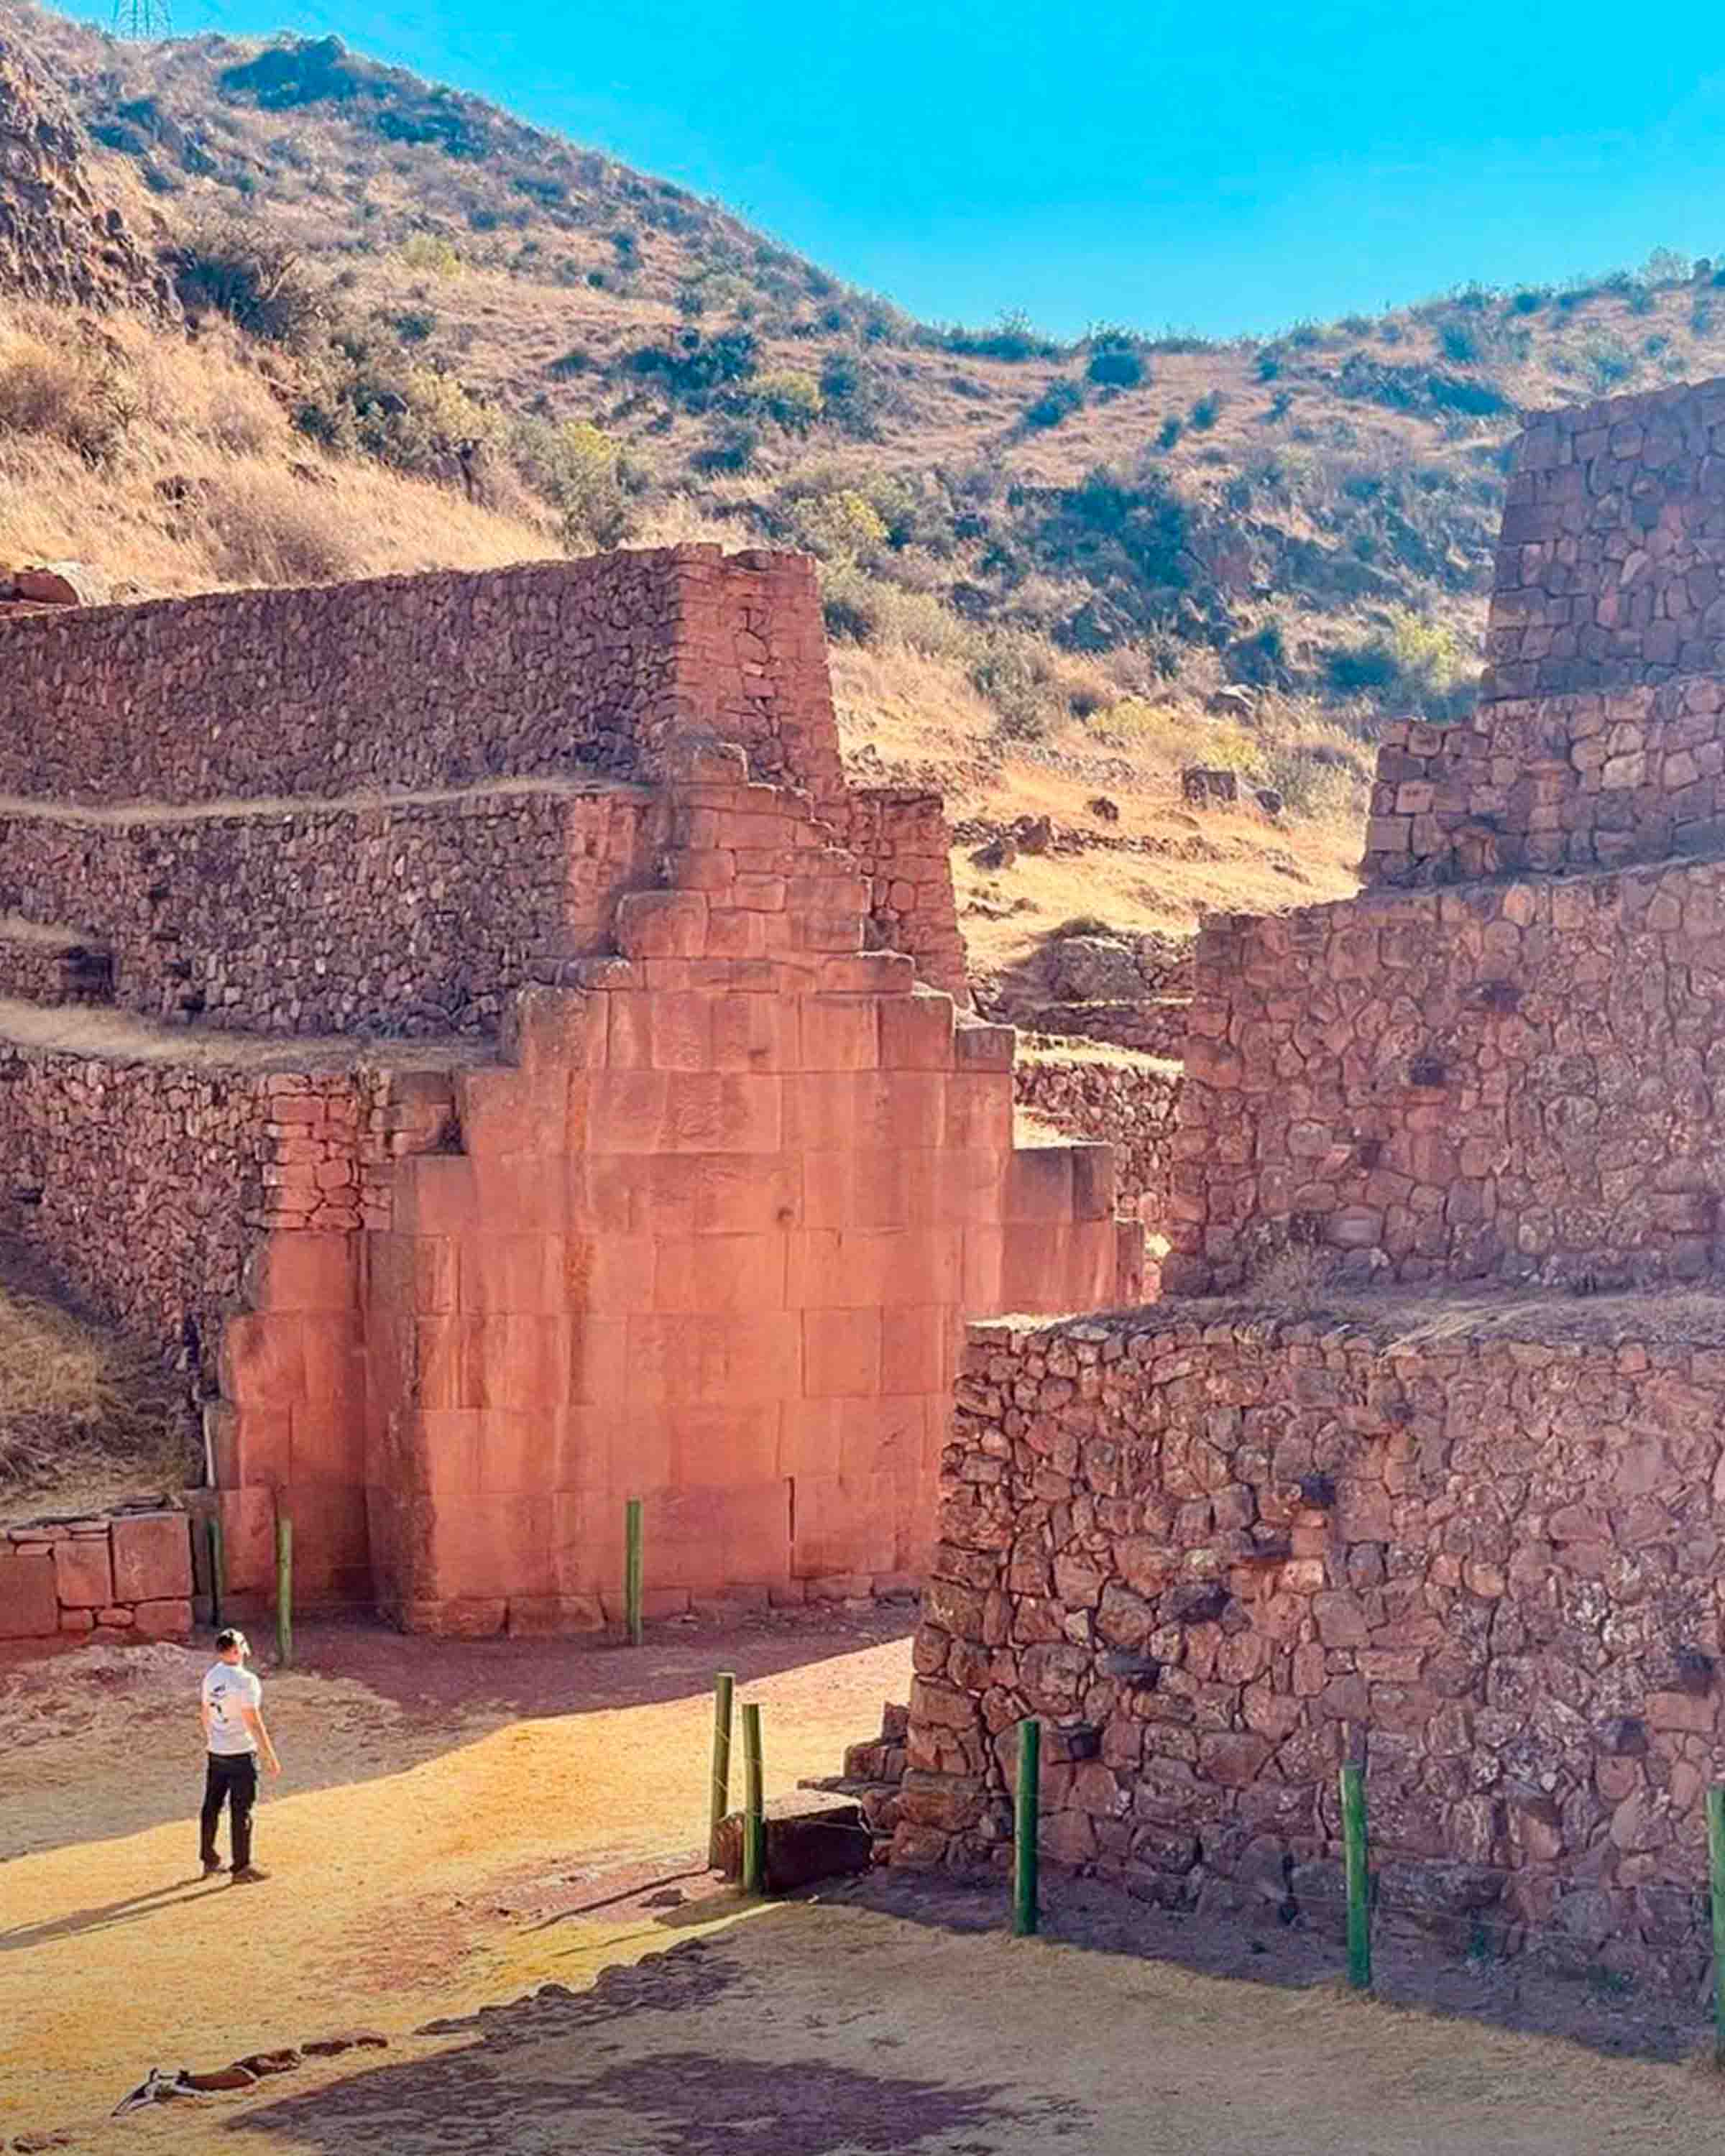 Rumiqolqa means "stone bleachers" in Quechua | TreXperience